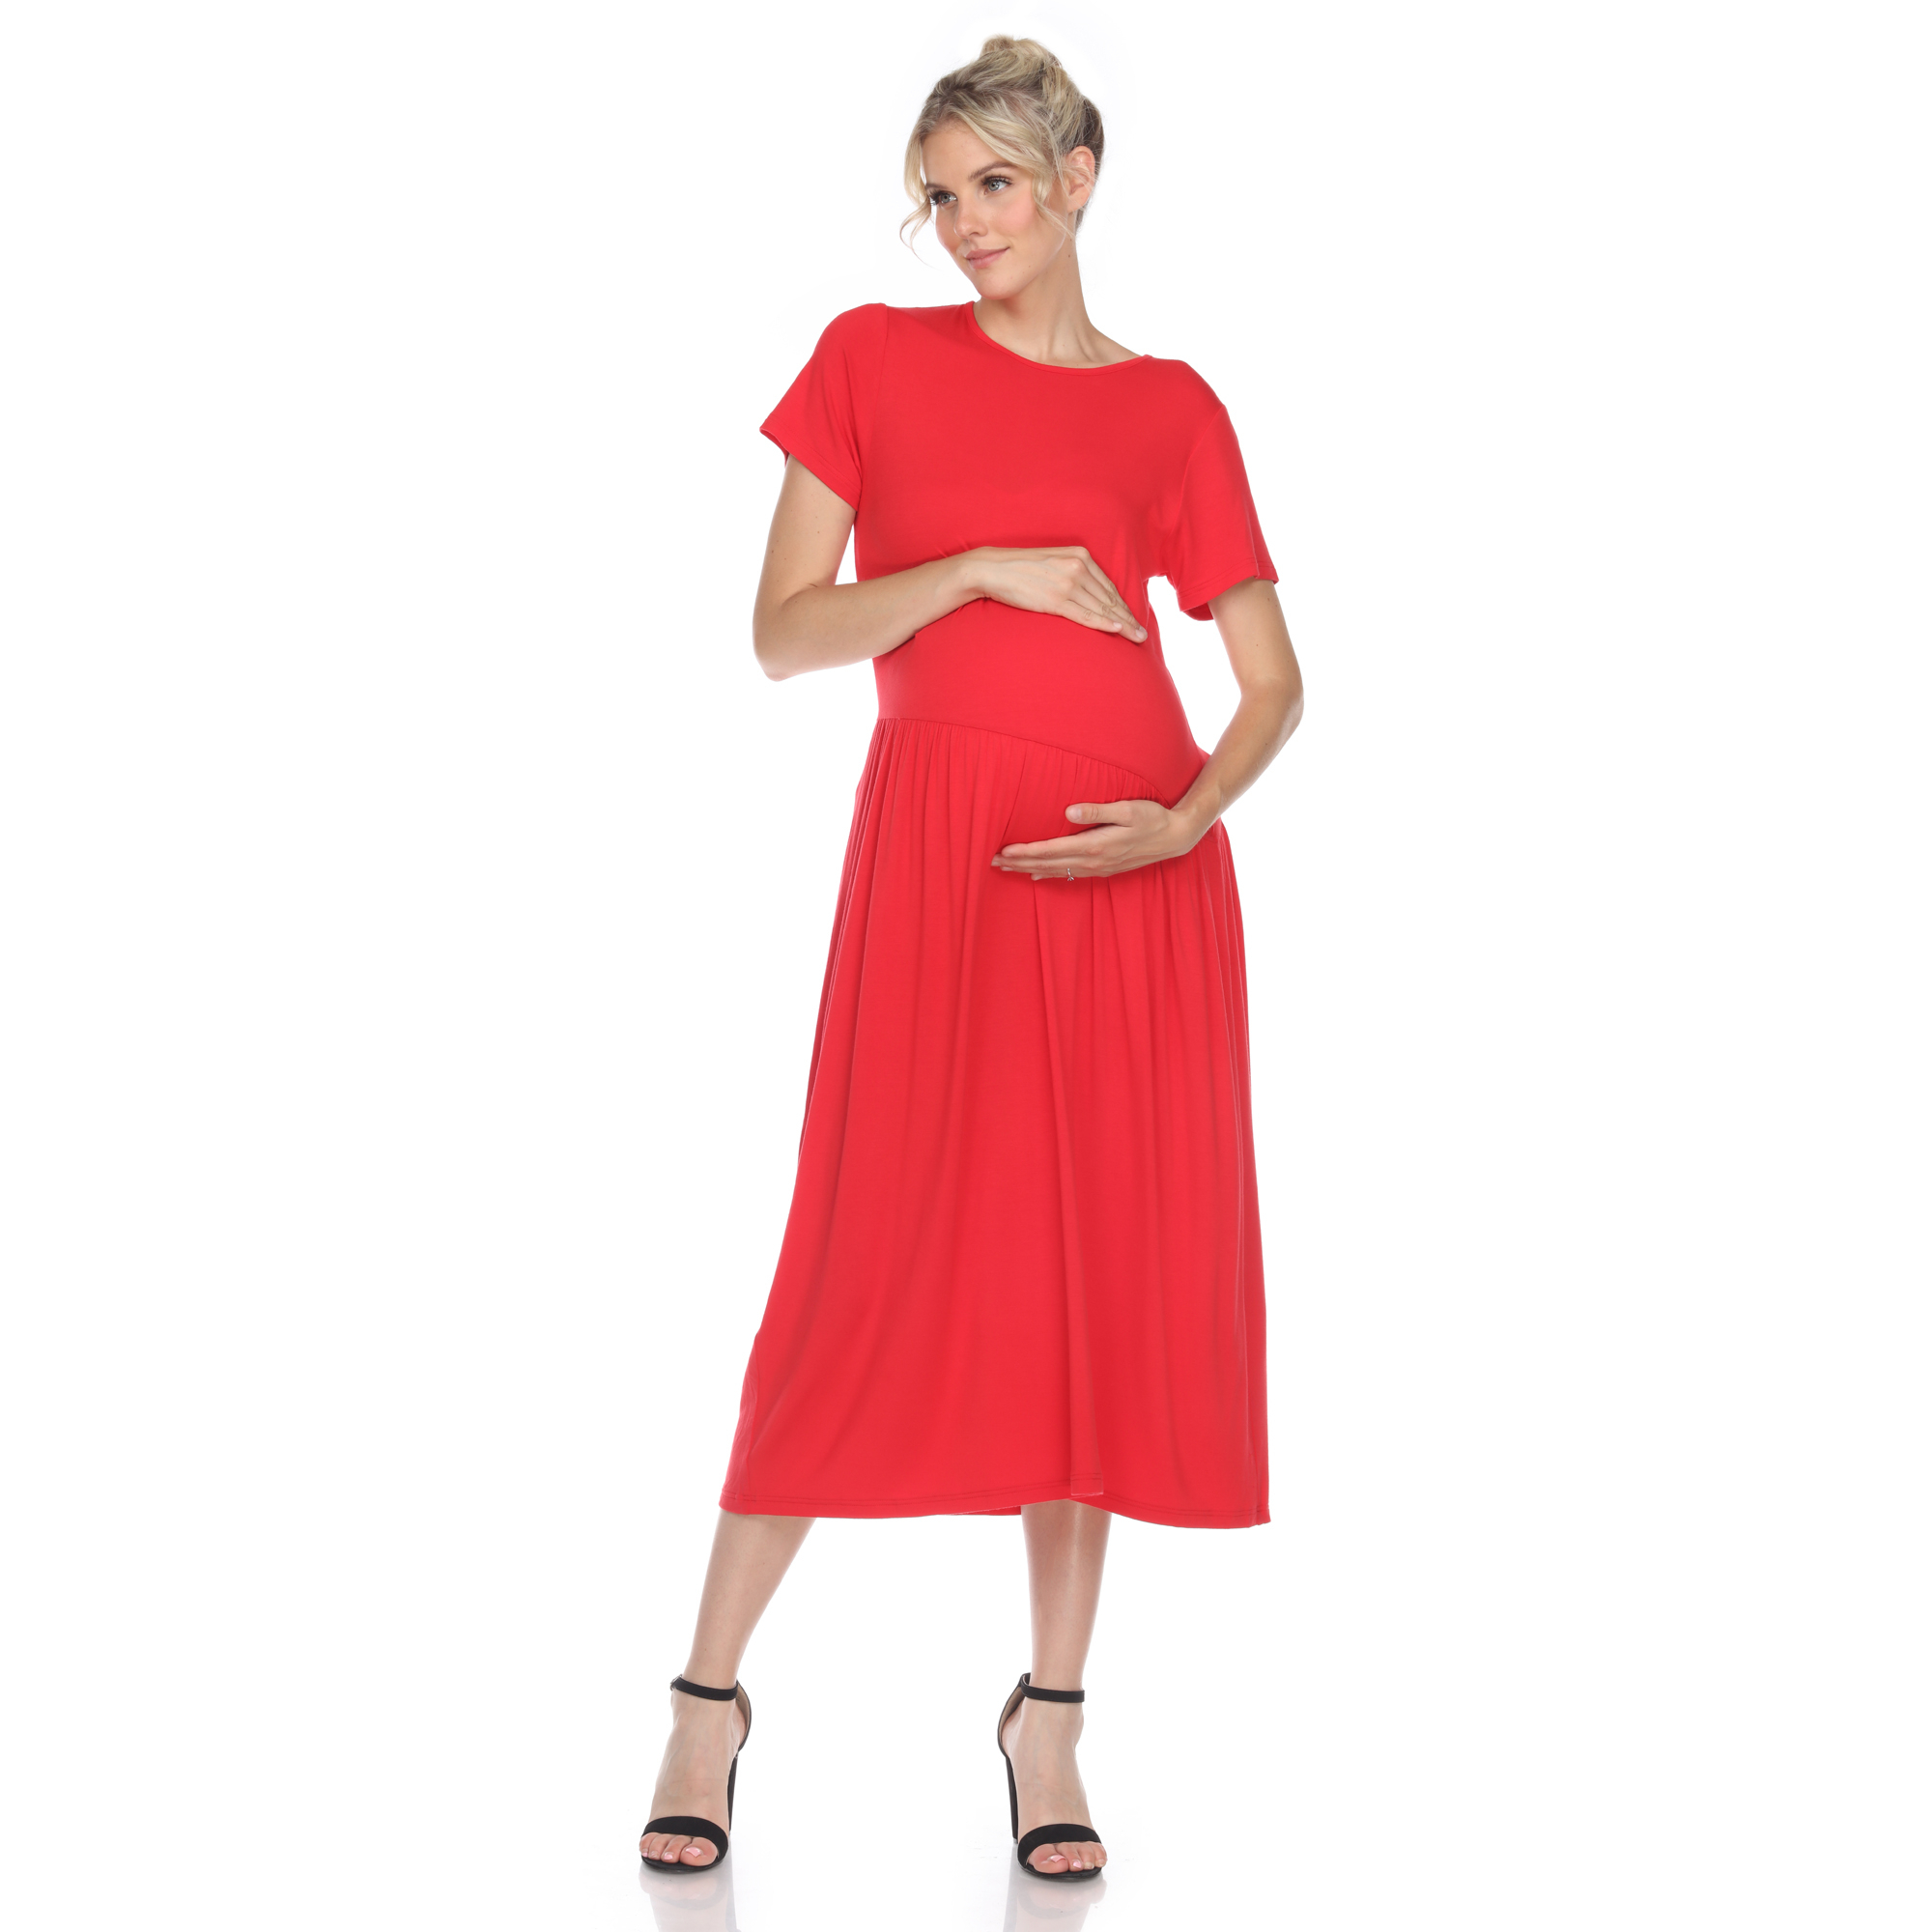 White Mark Womenâs Maternity Short Sleeve Maxi Dress - Red, 3X